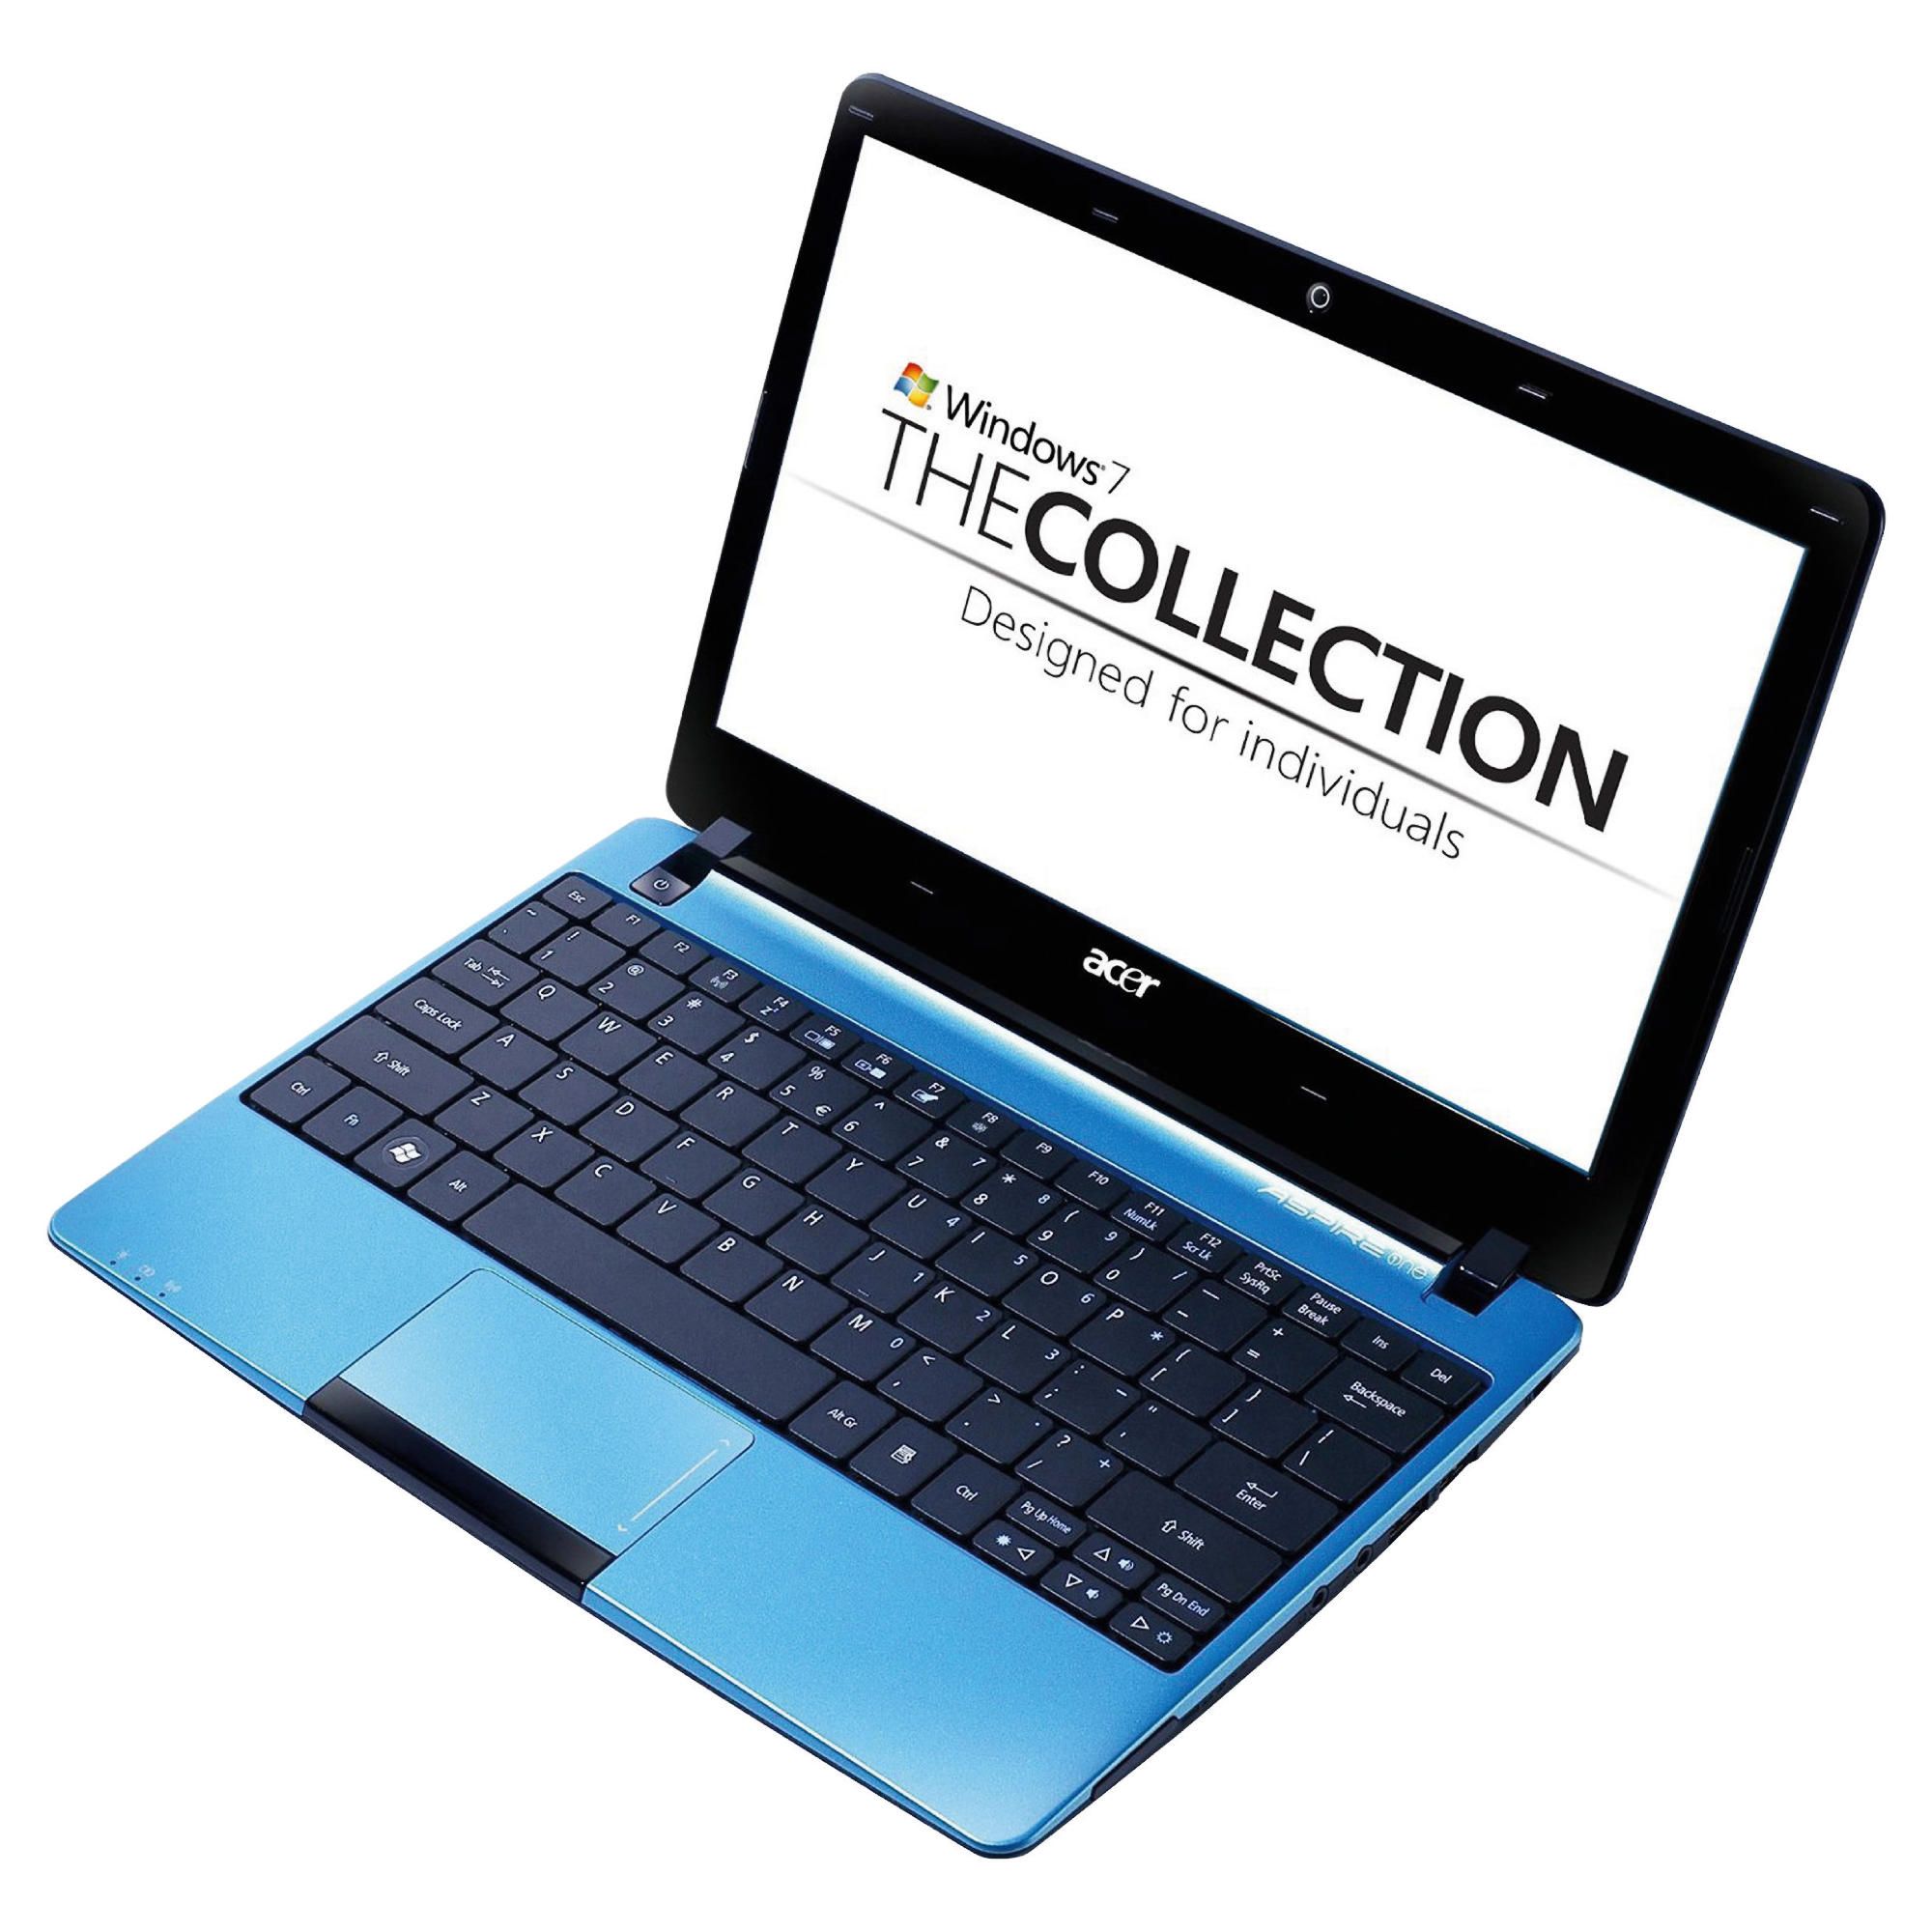 Acer Aspire One 722 Netbook (AMD, 2GB, 320GB, 11.6'' HD Display) Aqua at Tesco Direct